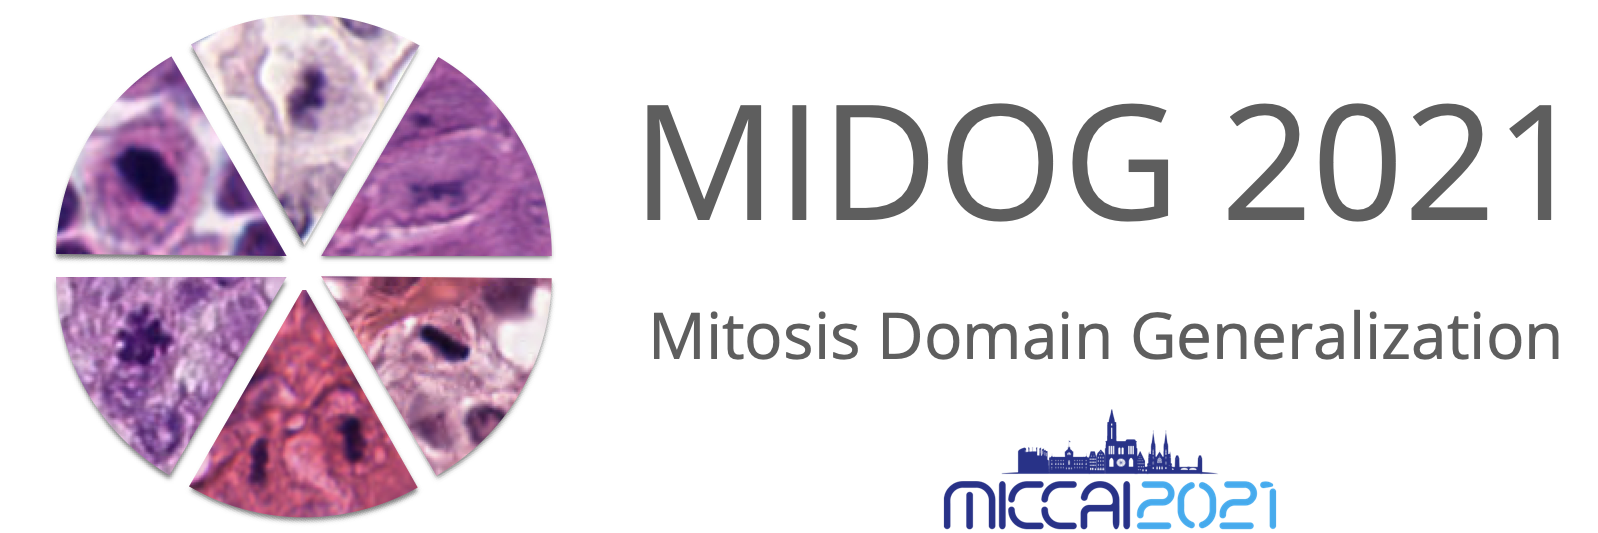 MIDOG Challenge 2021